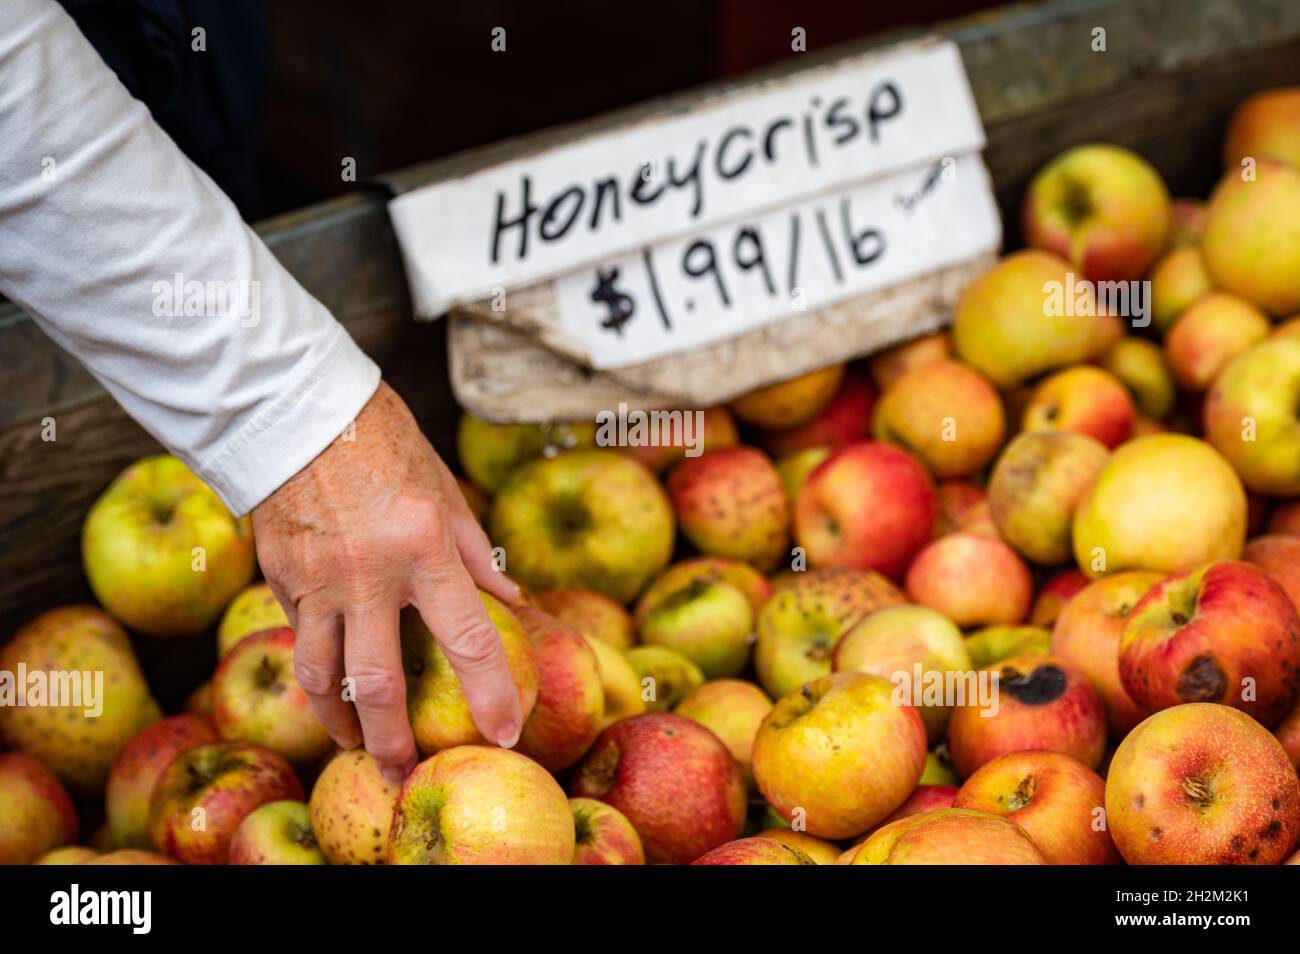 An older woman's hand reaching into a bin of honeycrisp apples on a farm. Stock Photo